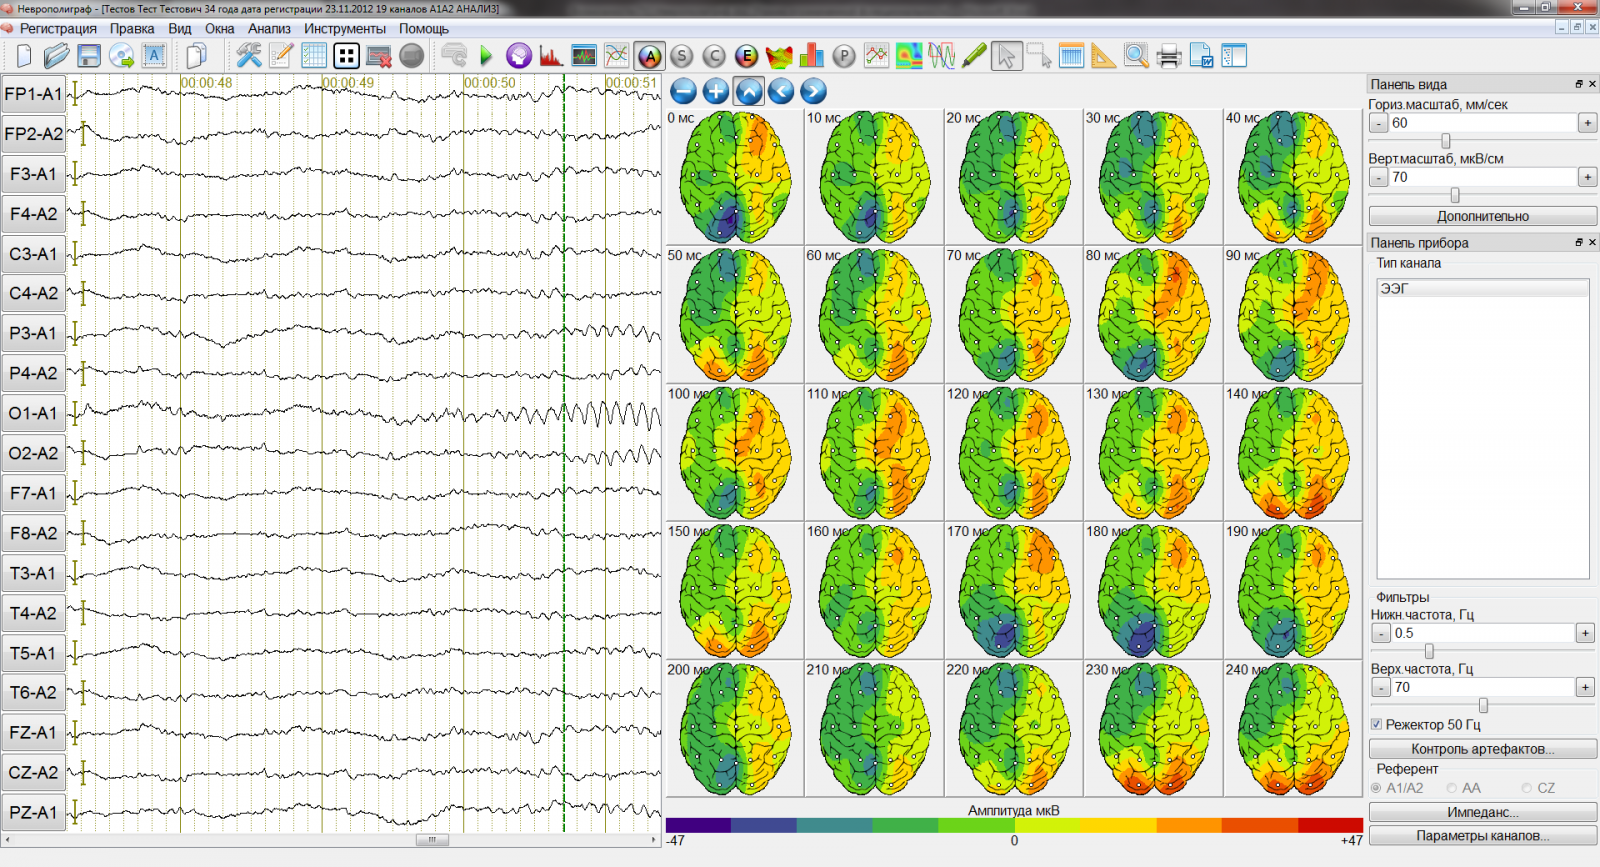 Регистрация активности мозга. ЭЭГ картирование головного мозга. Топографическое картирование электрической активности мозга. Метод картирования ЭЭГ. Картирование электрической активности мозга с помощью ЭЭГ.